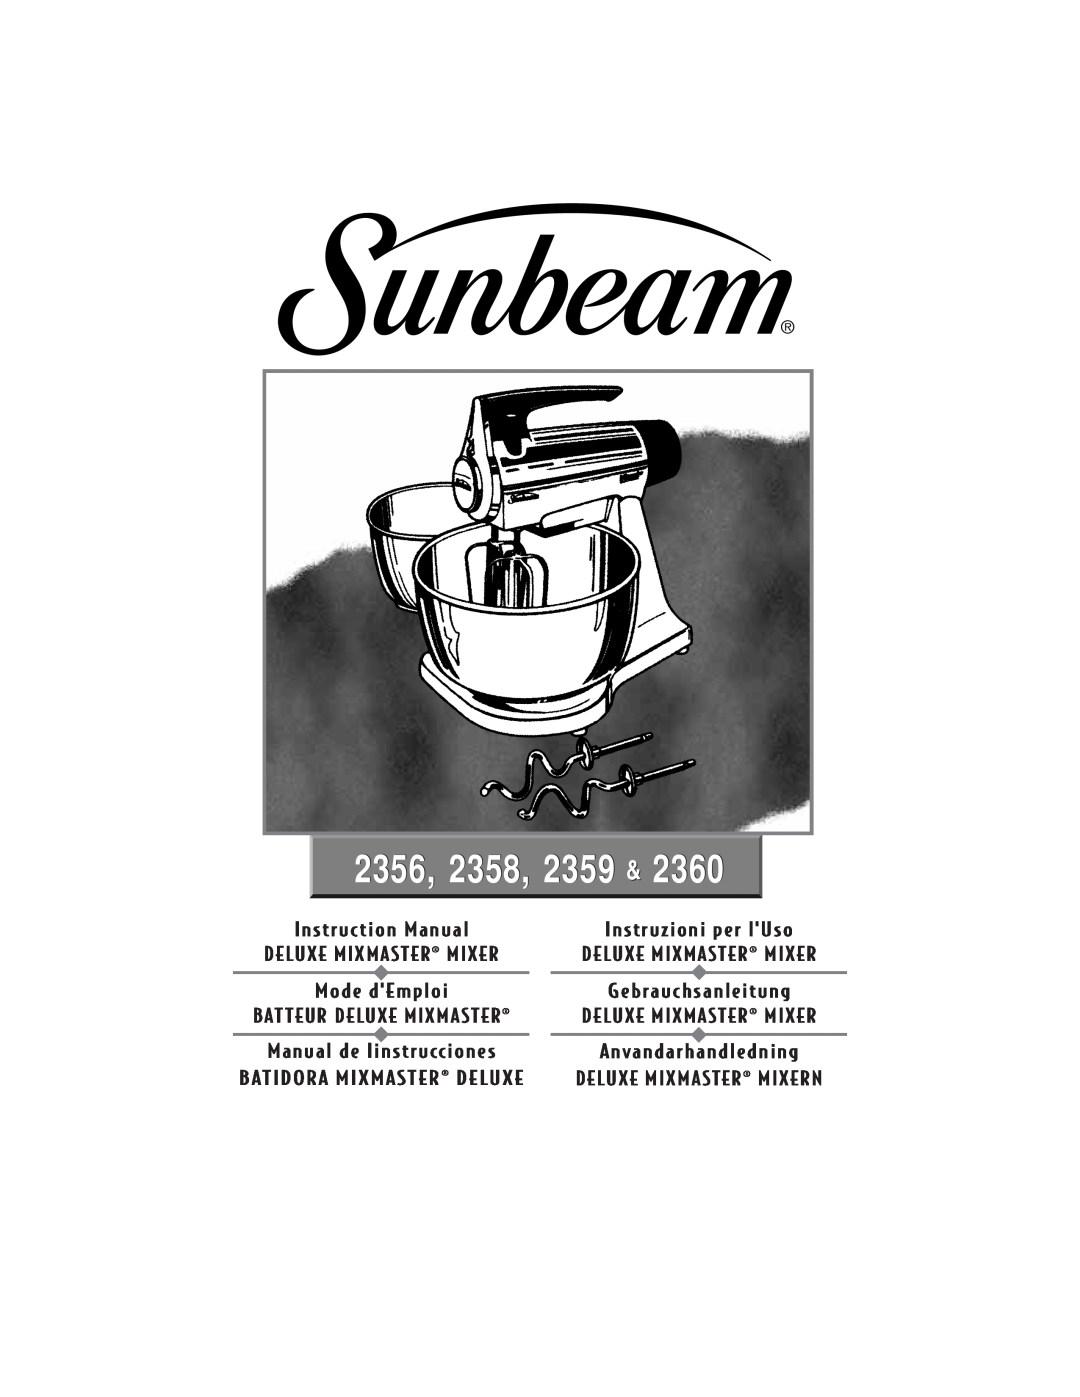 Sunbeam 2360 instruction manual 2356, 2358, 2359, Instruction Manual, Instruzioni per lUso, Deluxe Mixmaster ¨ Mixer 